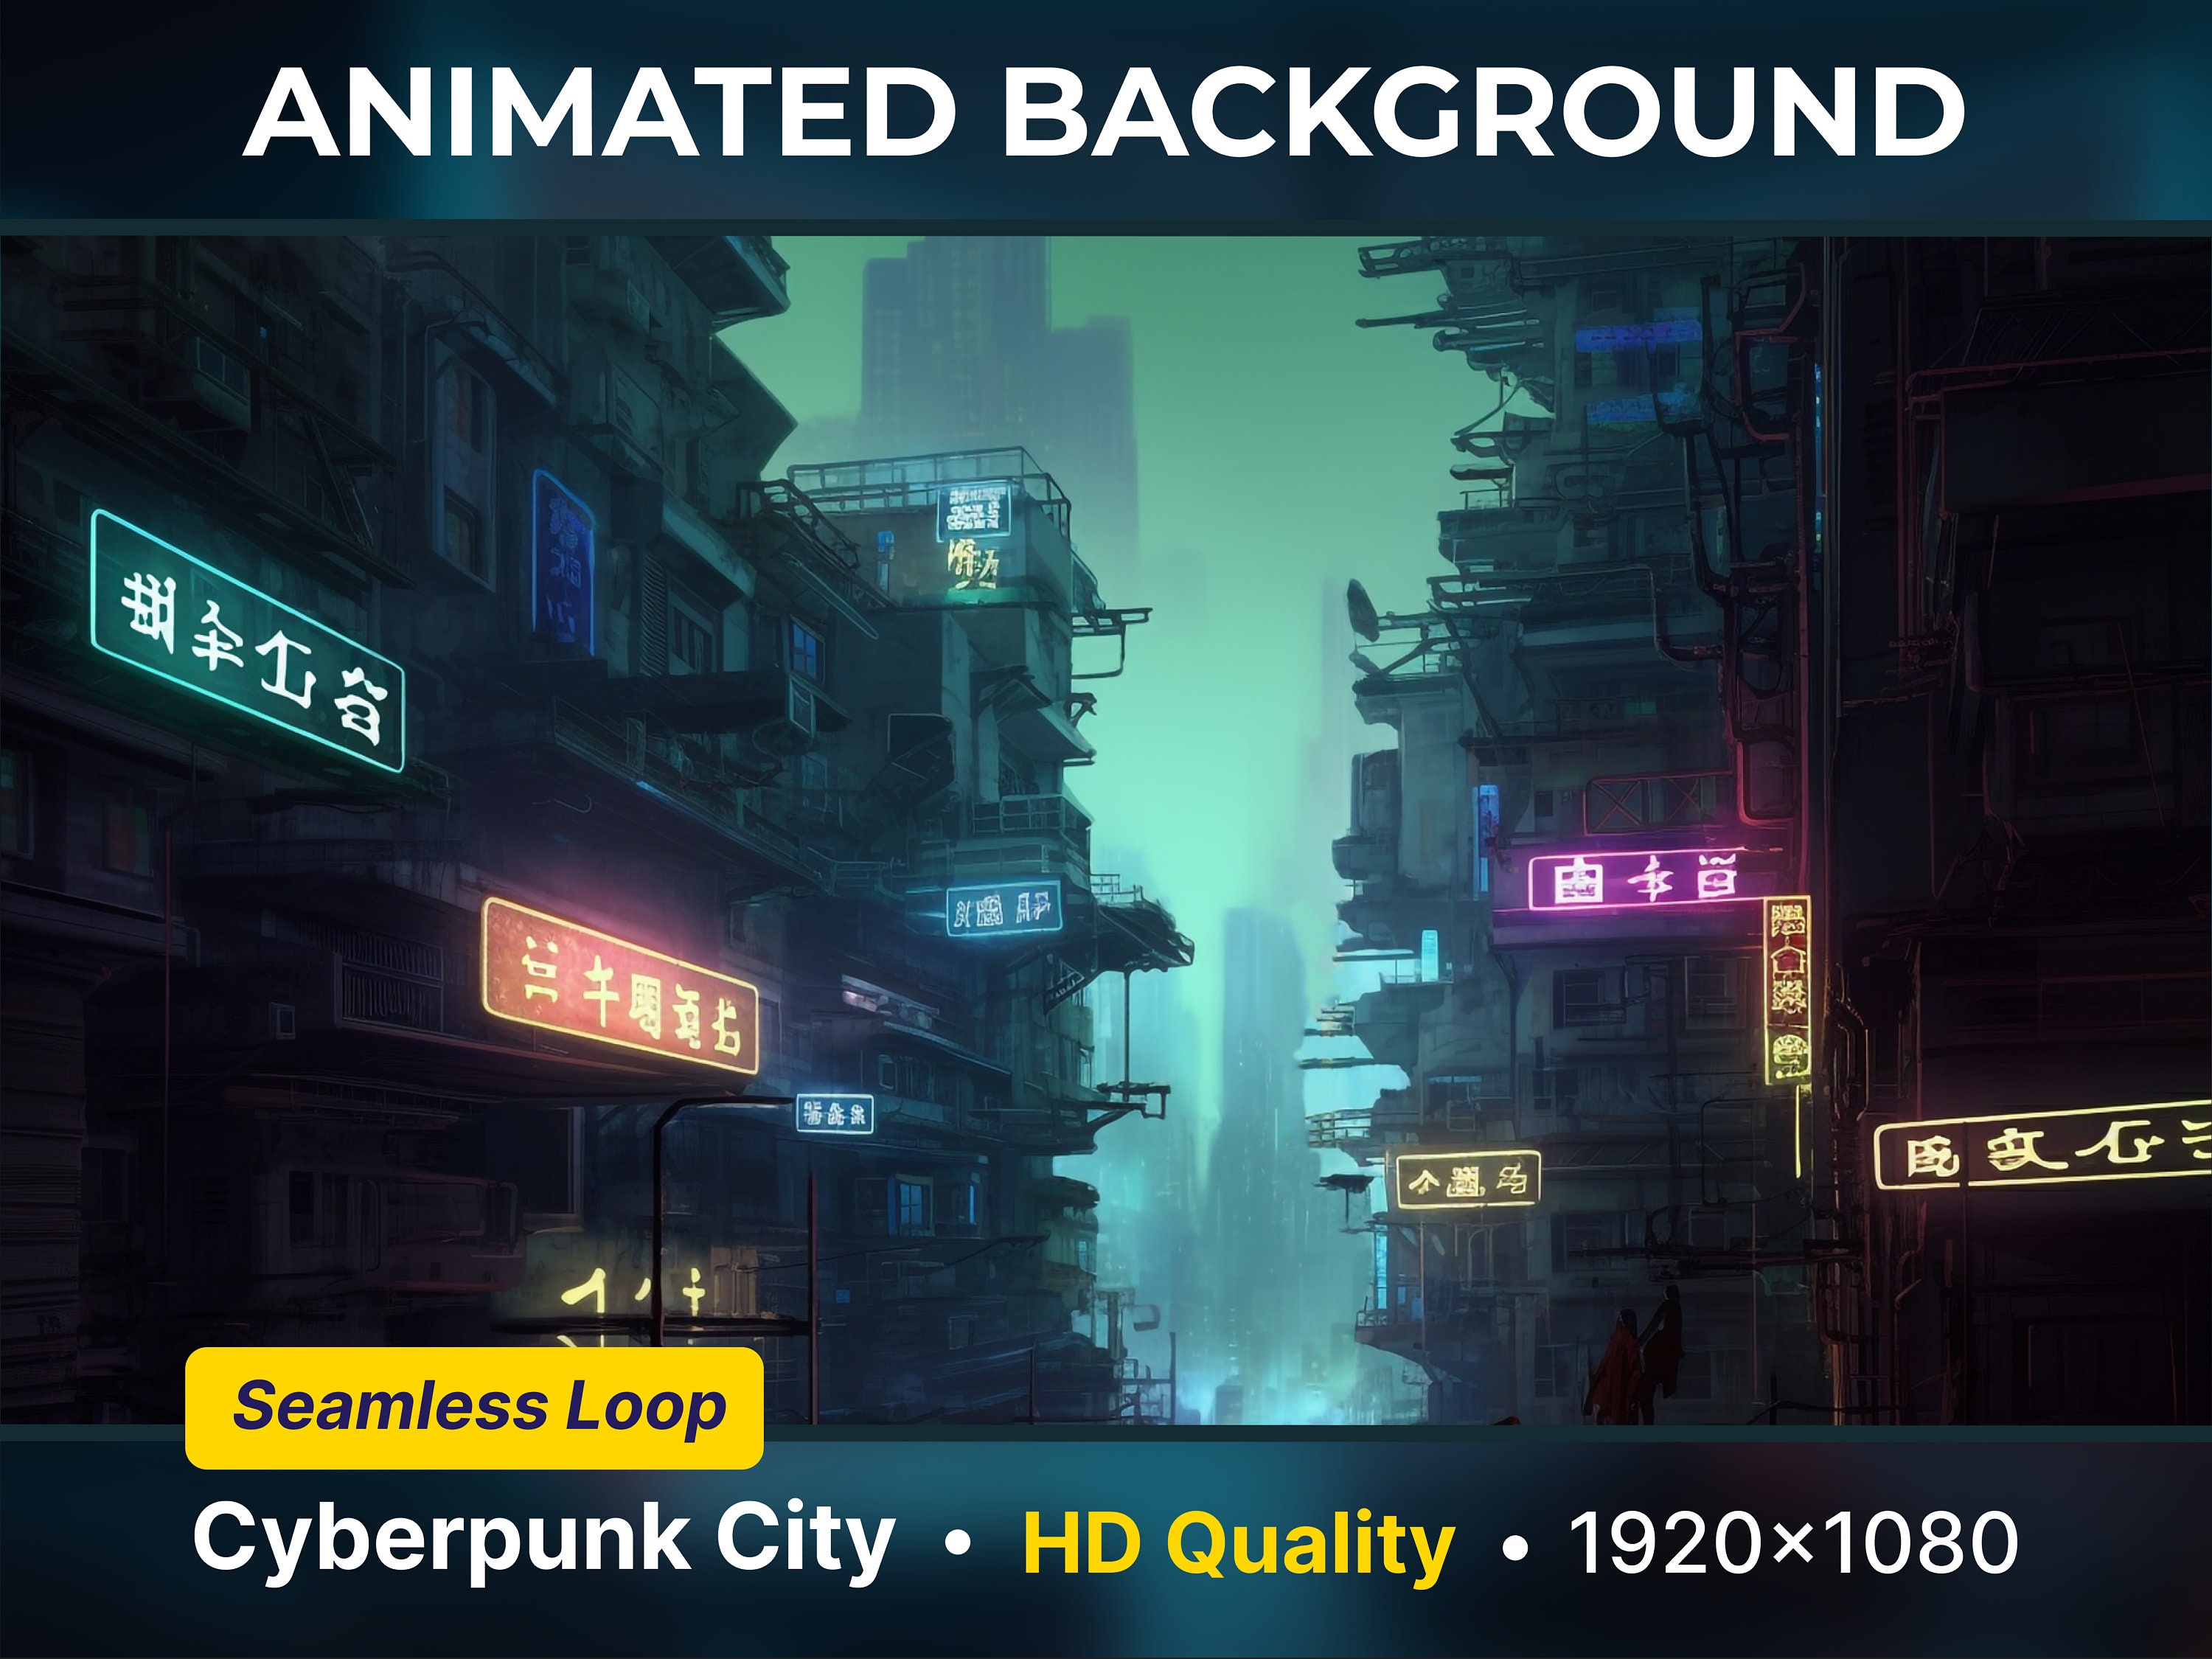 Cyberpunk Futuristic City Theme Live Wallpaper HD LOOP 